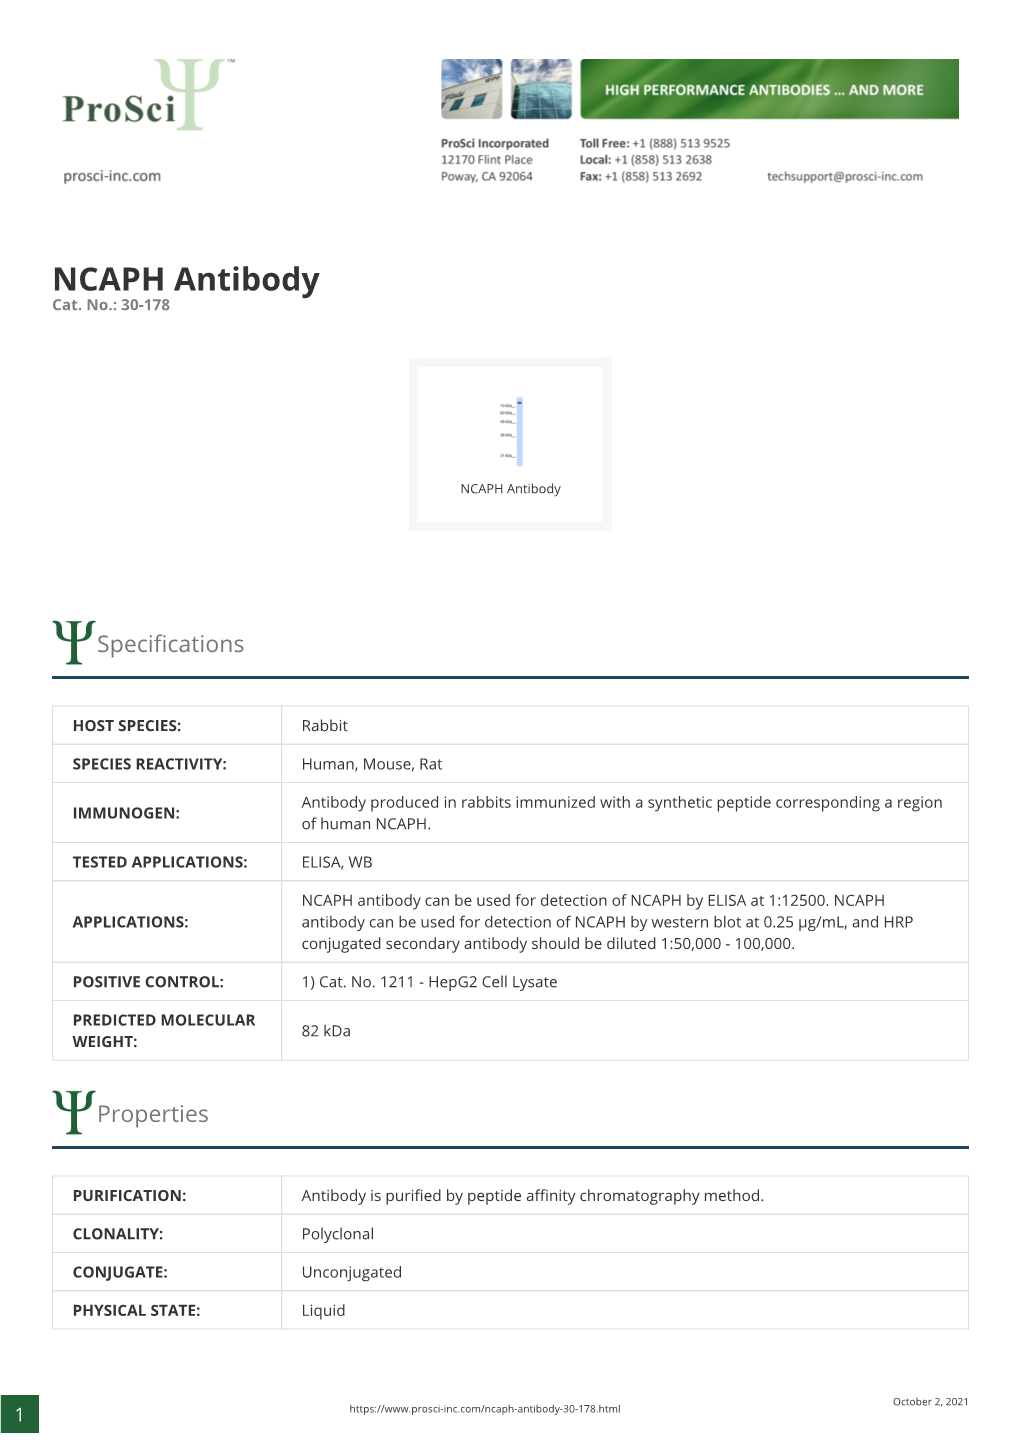 NCAPH Antibody Cat